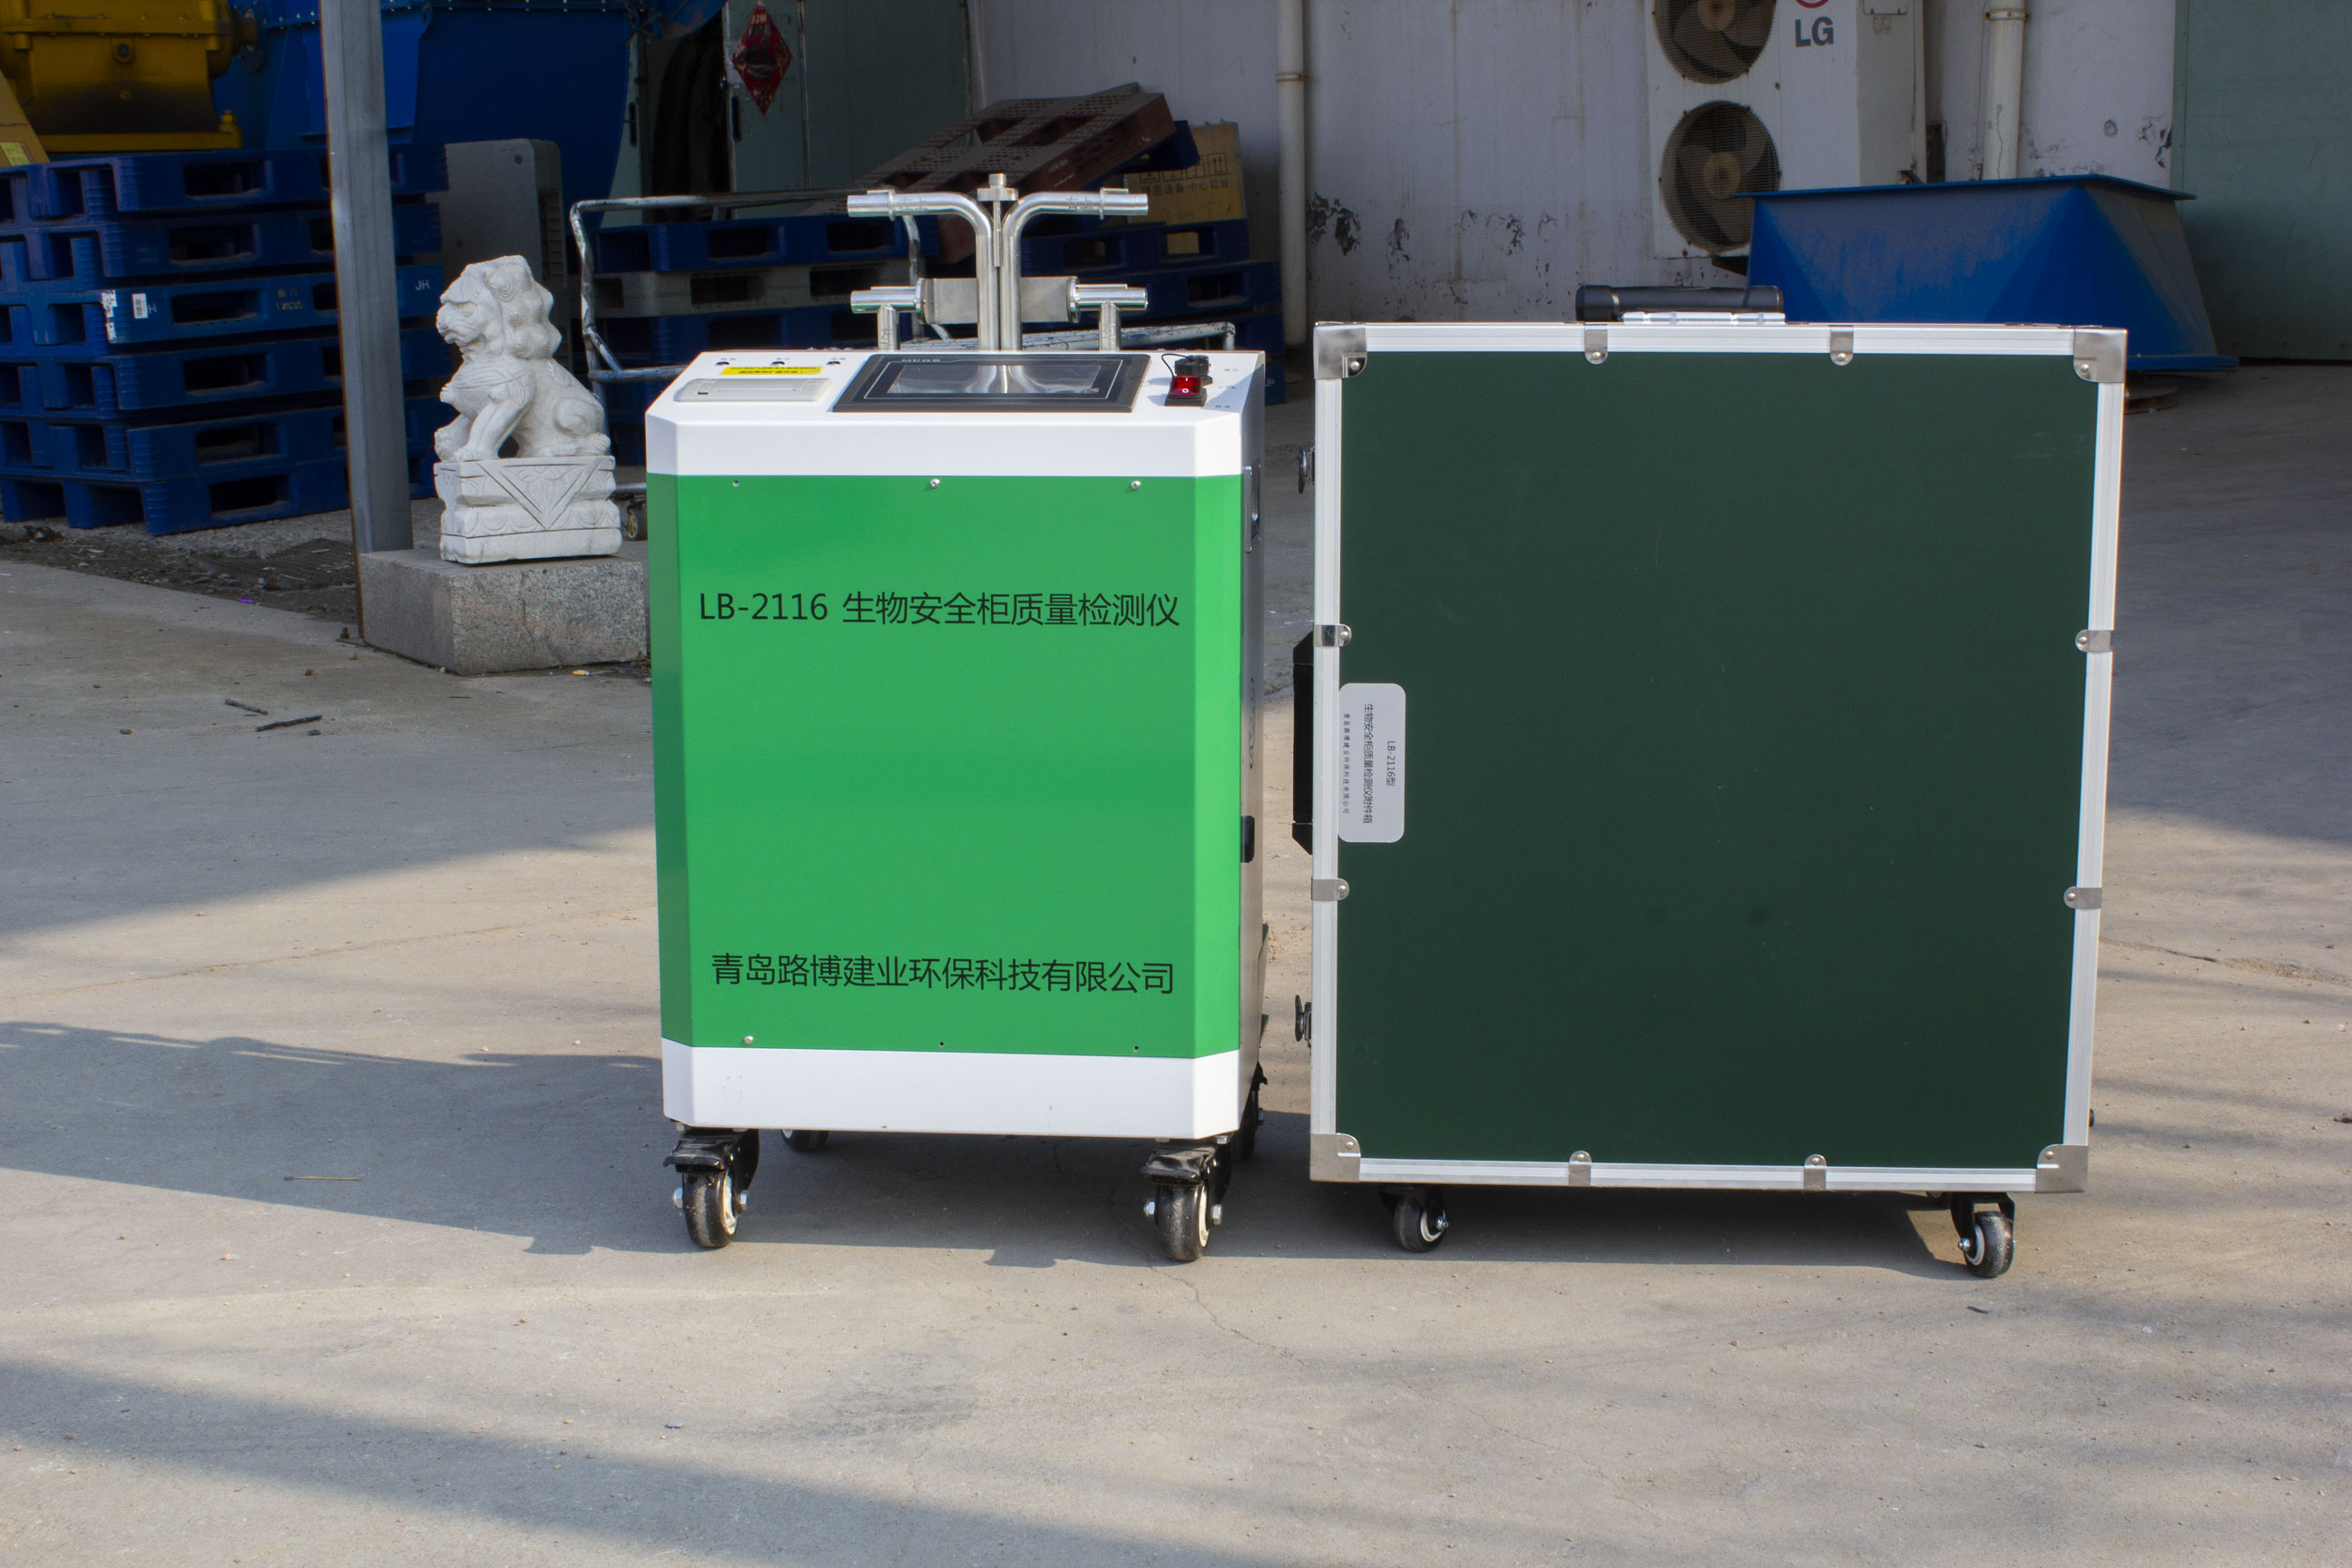 LB-2116型生物安 全 柜质量检测仪